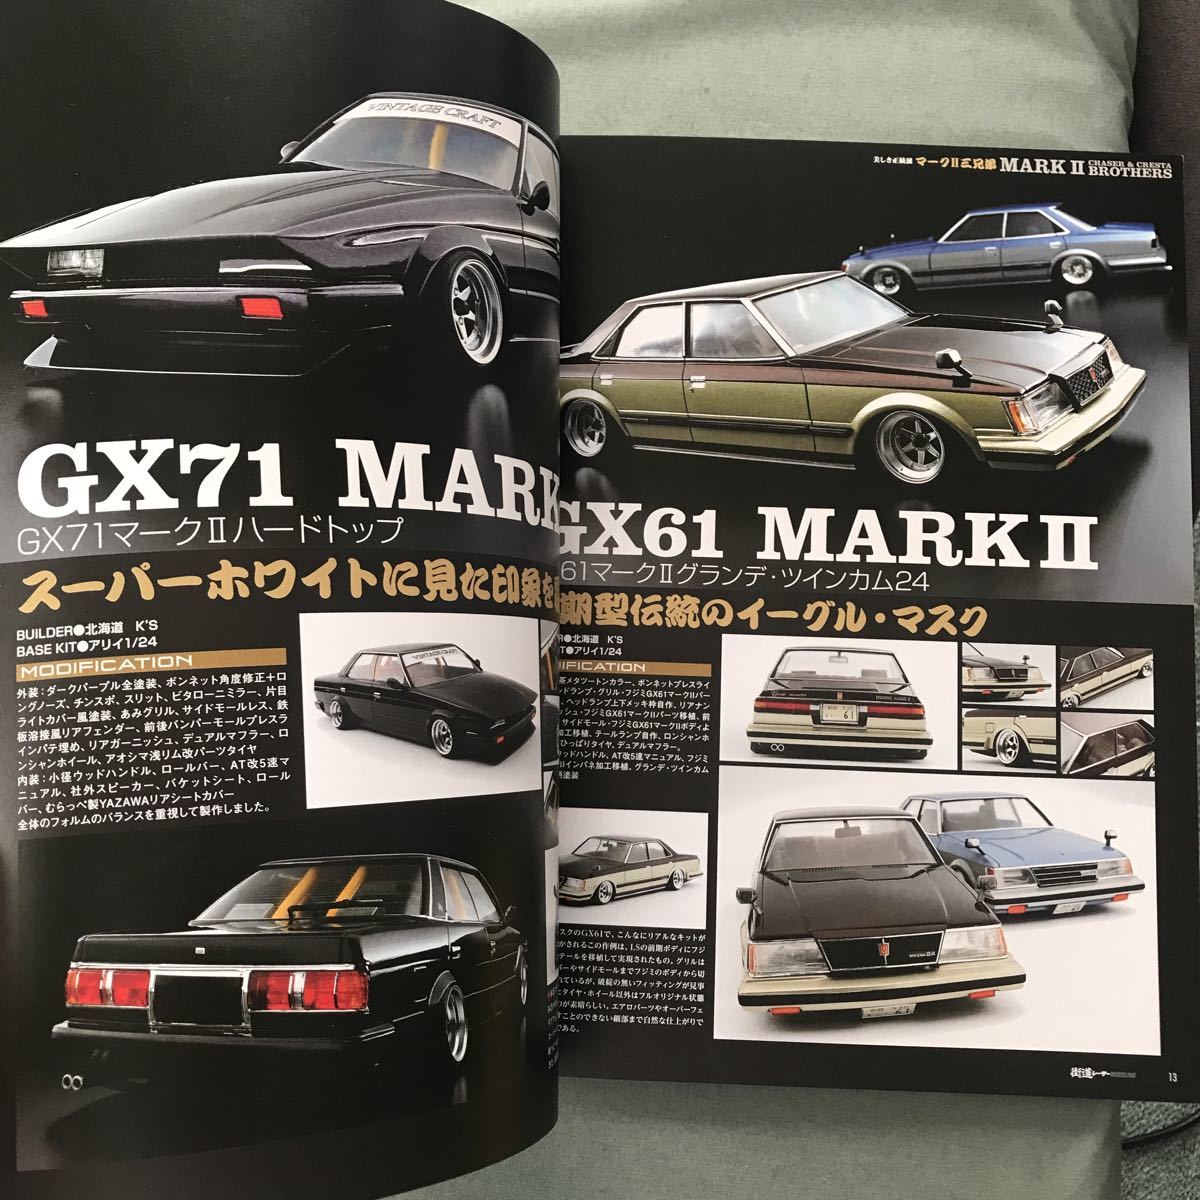  highway racer mote ring book@ magazine Mark II Cresta Chaser plastic model TOYOTA MARK2 MX41 GX51 GX61 GX71 japanese car magazine